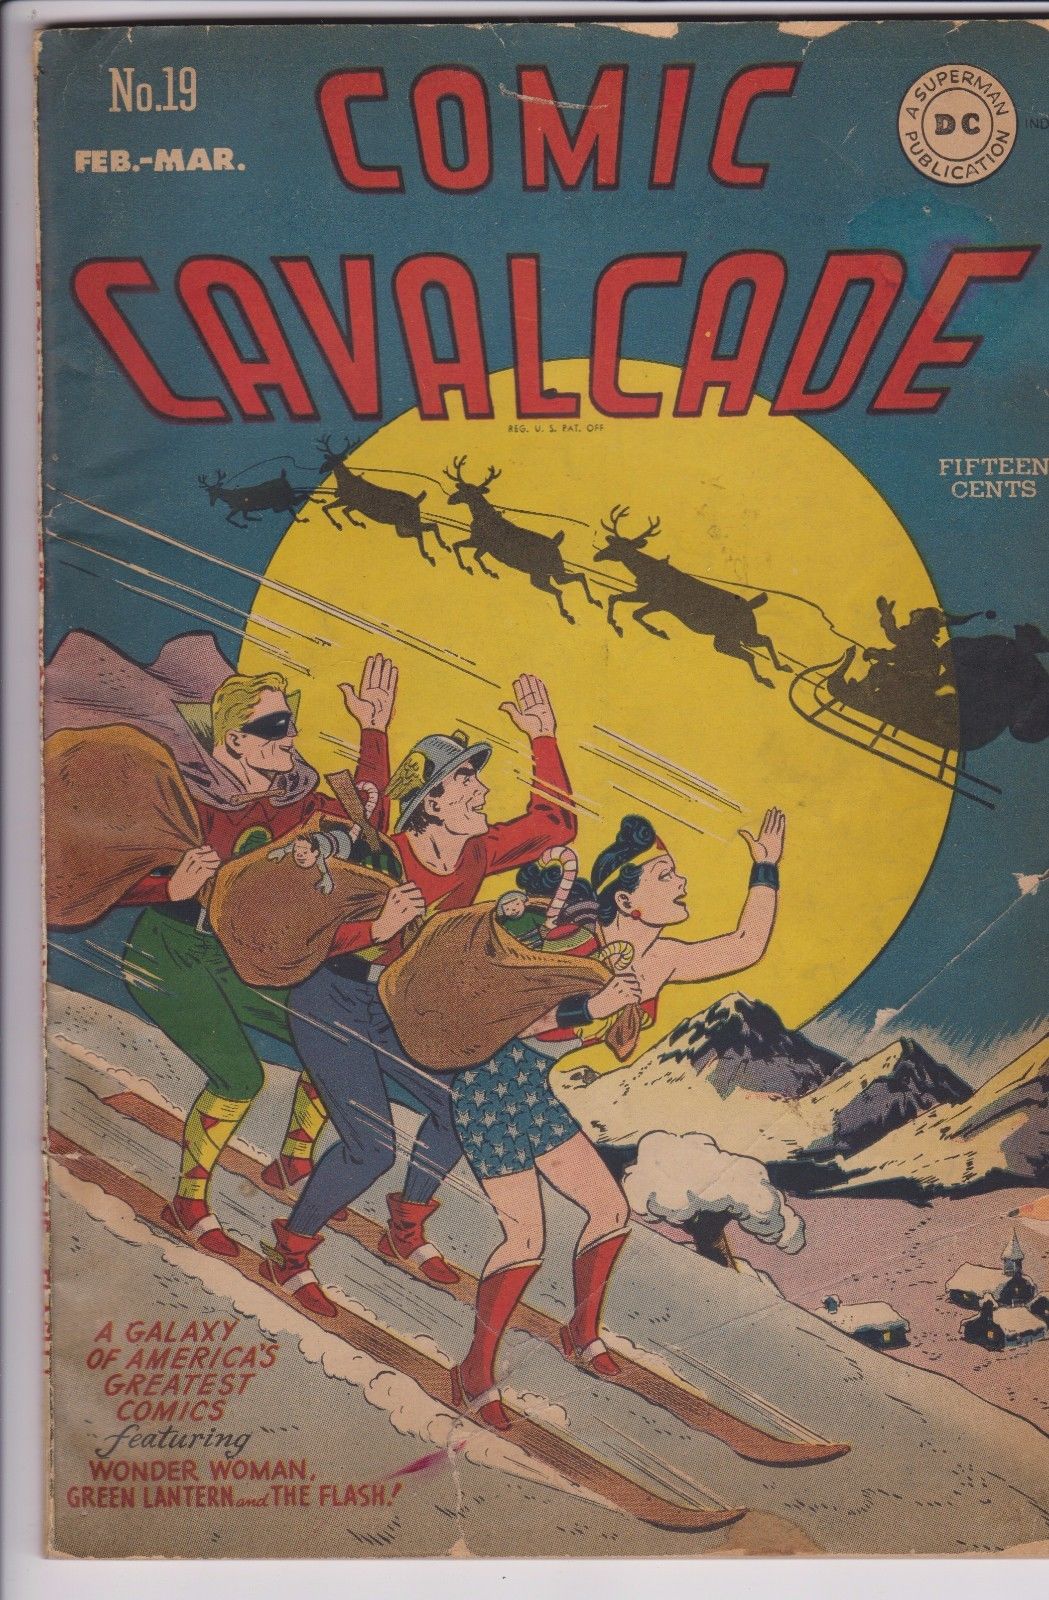 Comic Cavalcade #19 (Feb-Mar 1947, DC) Golden Age Wonder Woman T